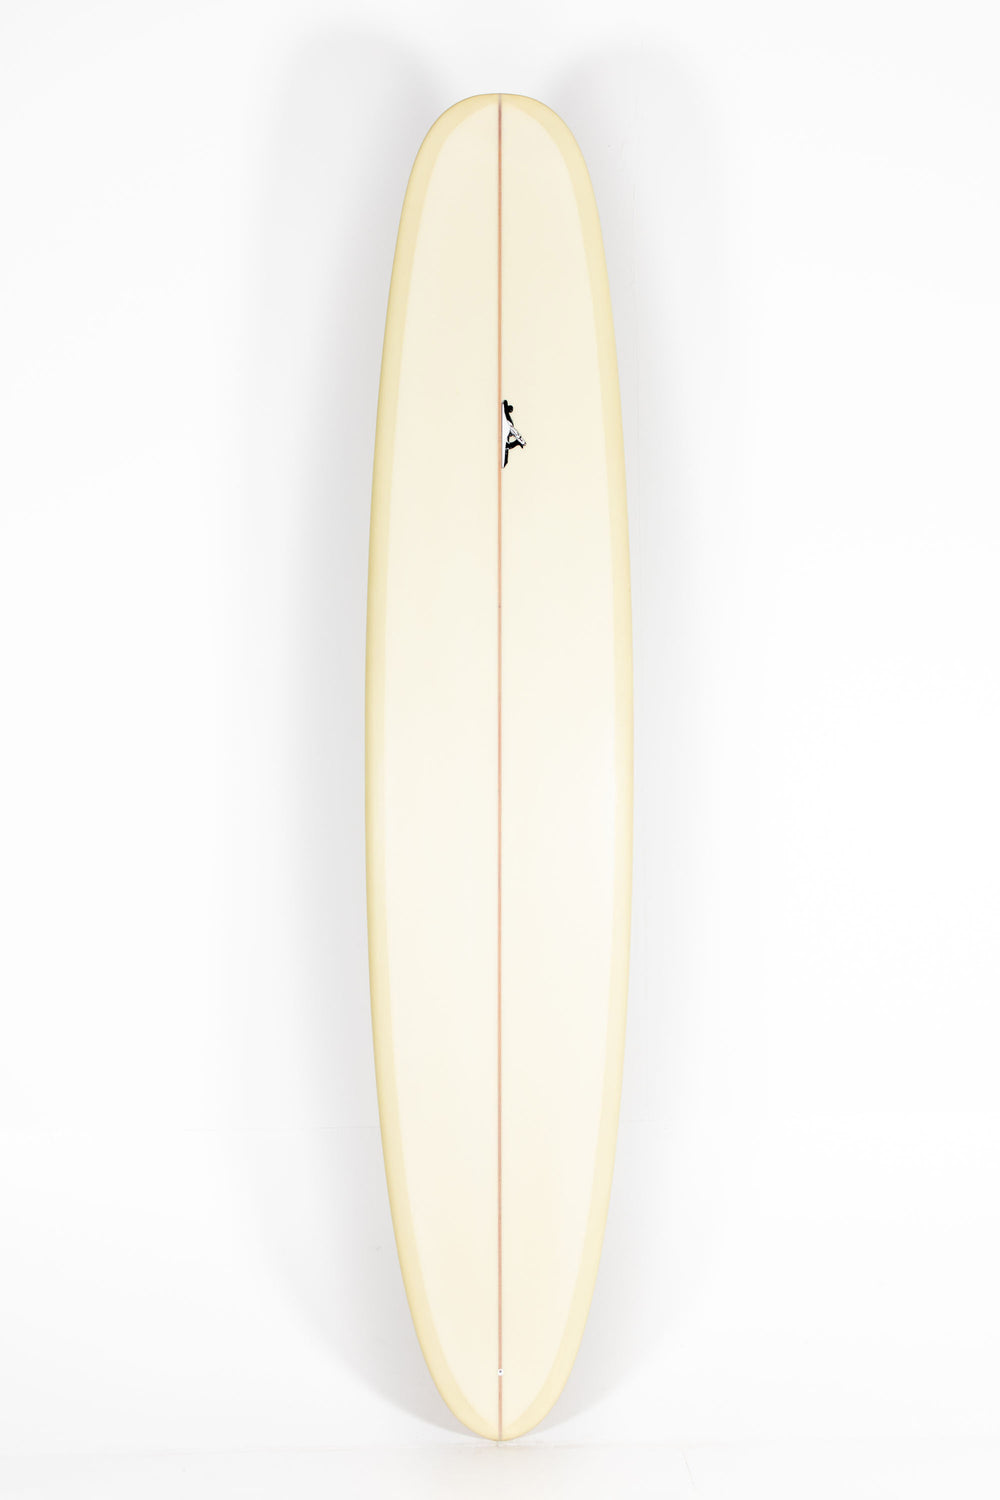 Pukas Surf shop - Thomas Surfboards - WIZL - 9'4